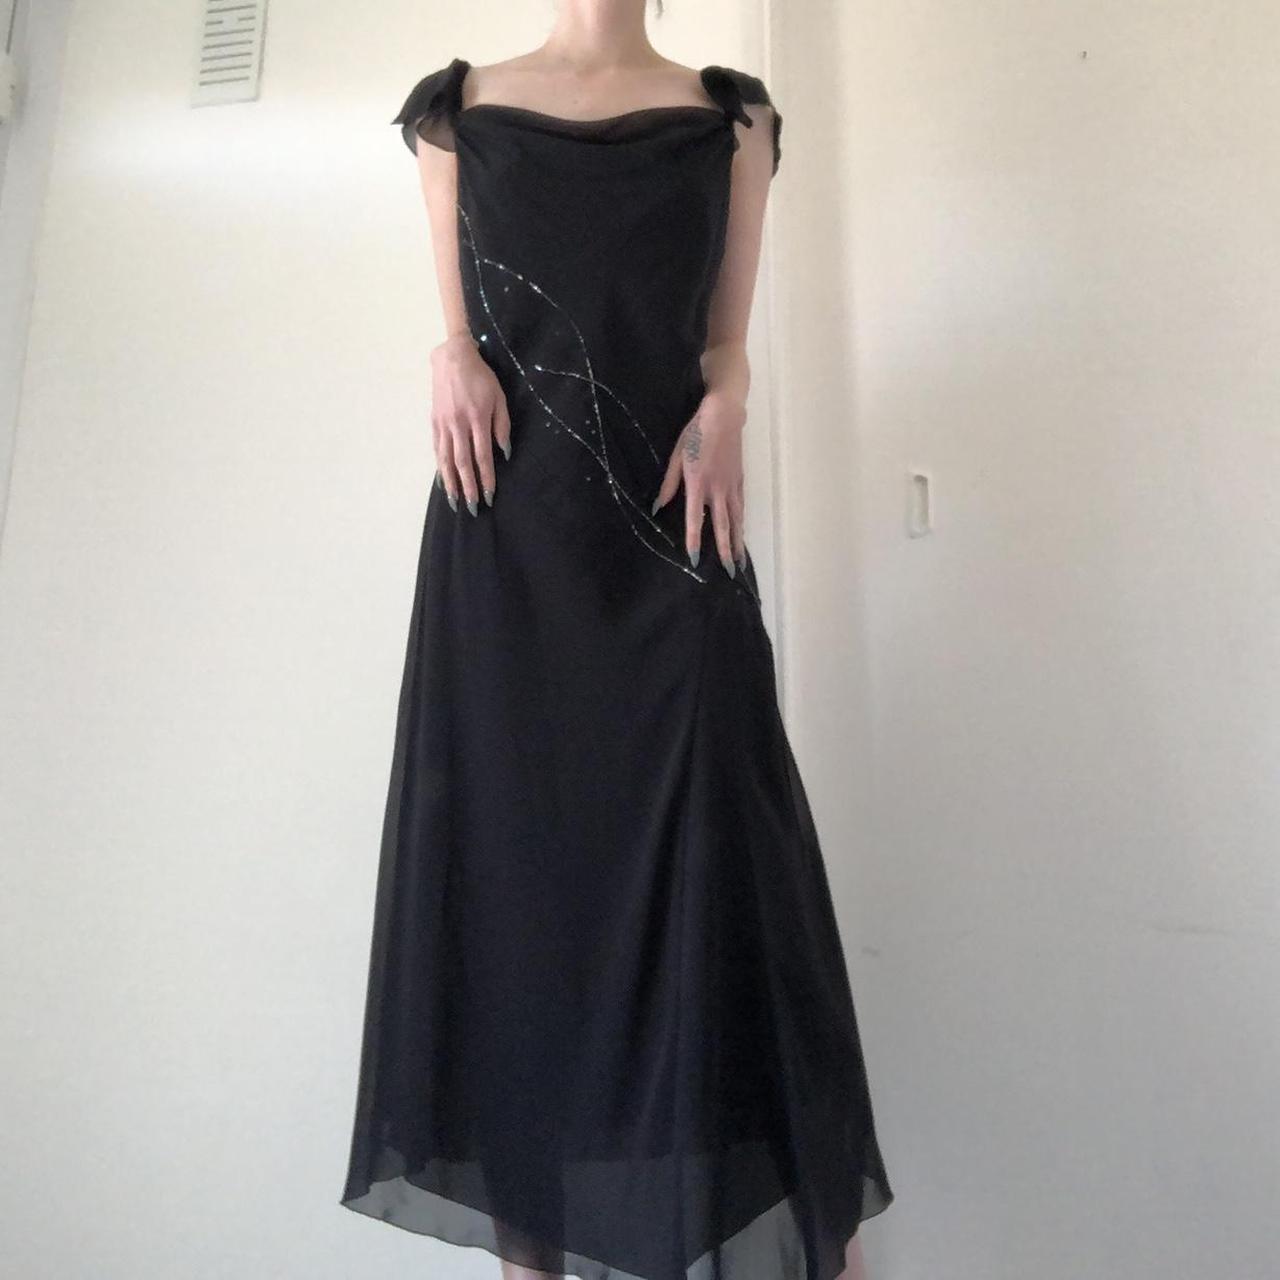 Whimsigoth prom dress in black Label: Berkertex... - Depop